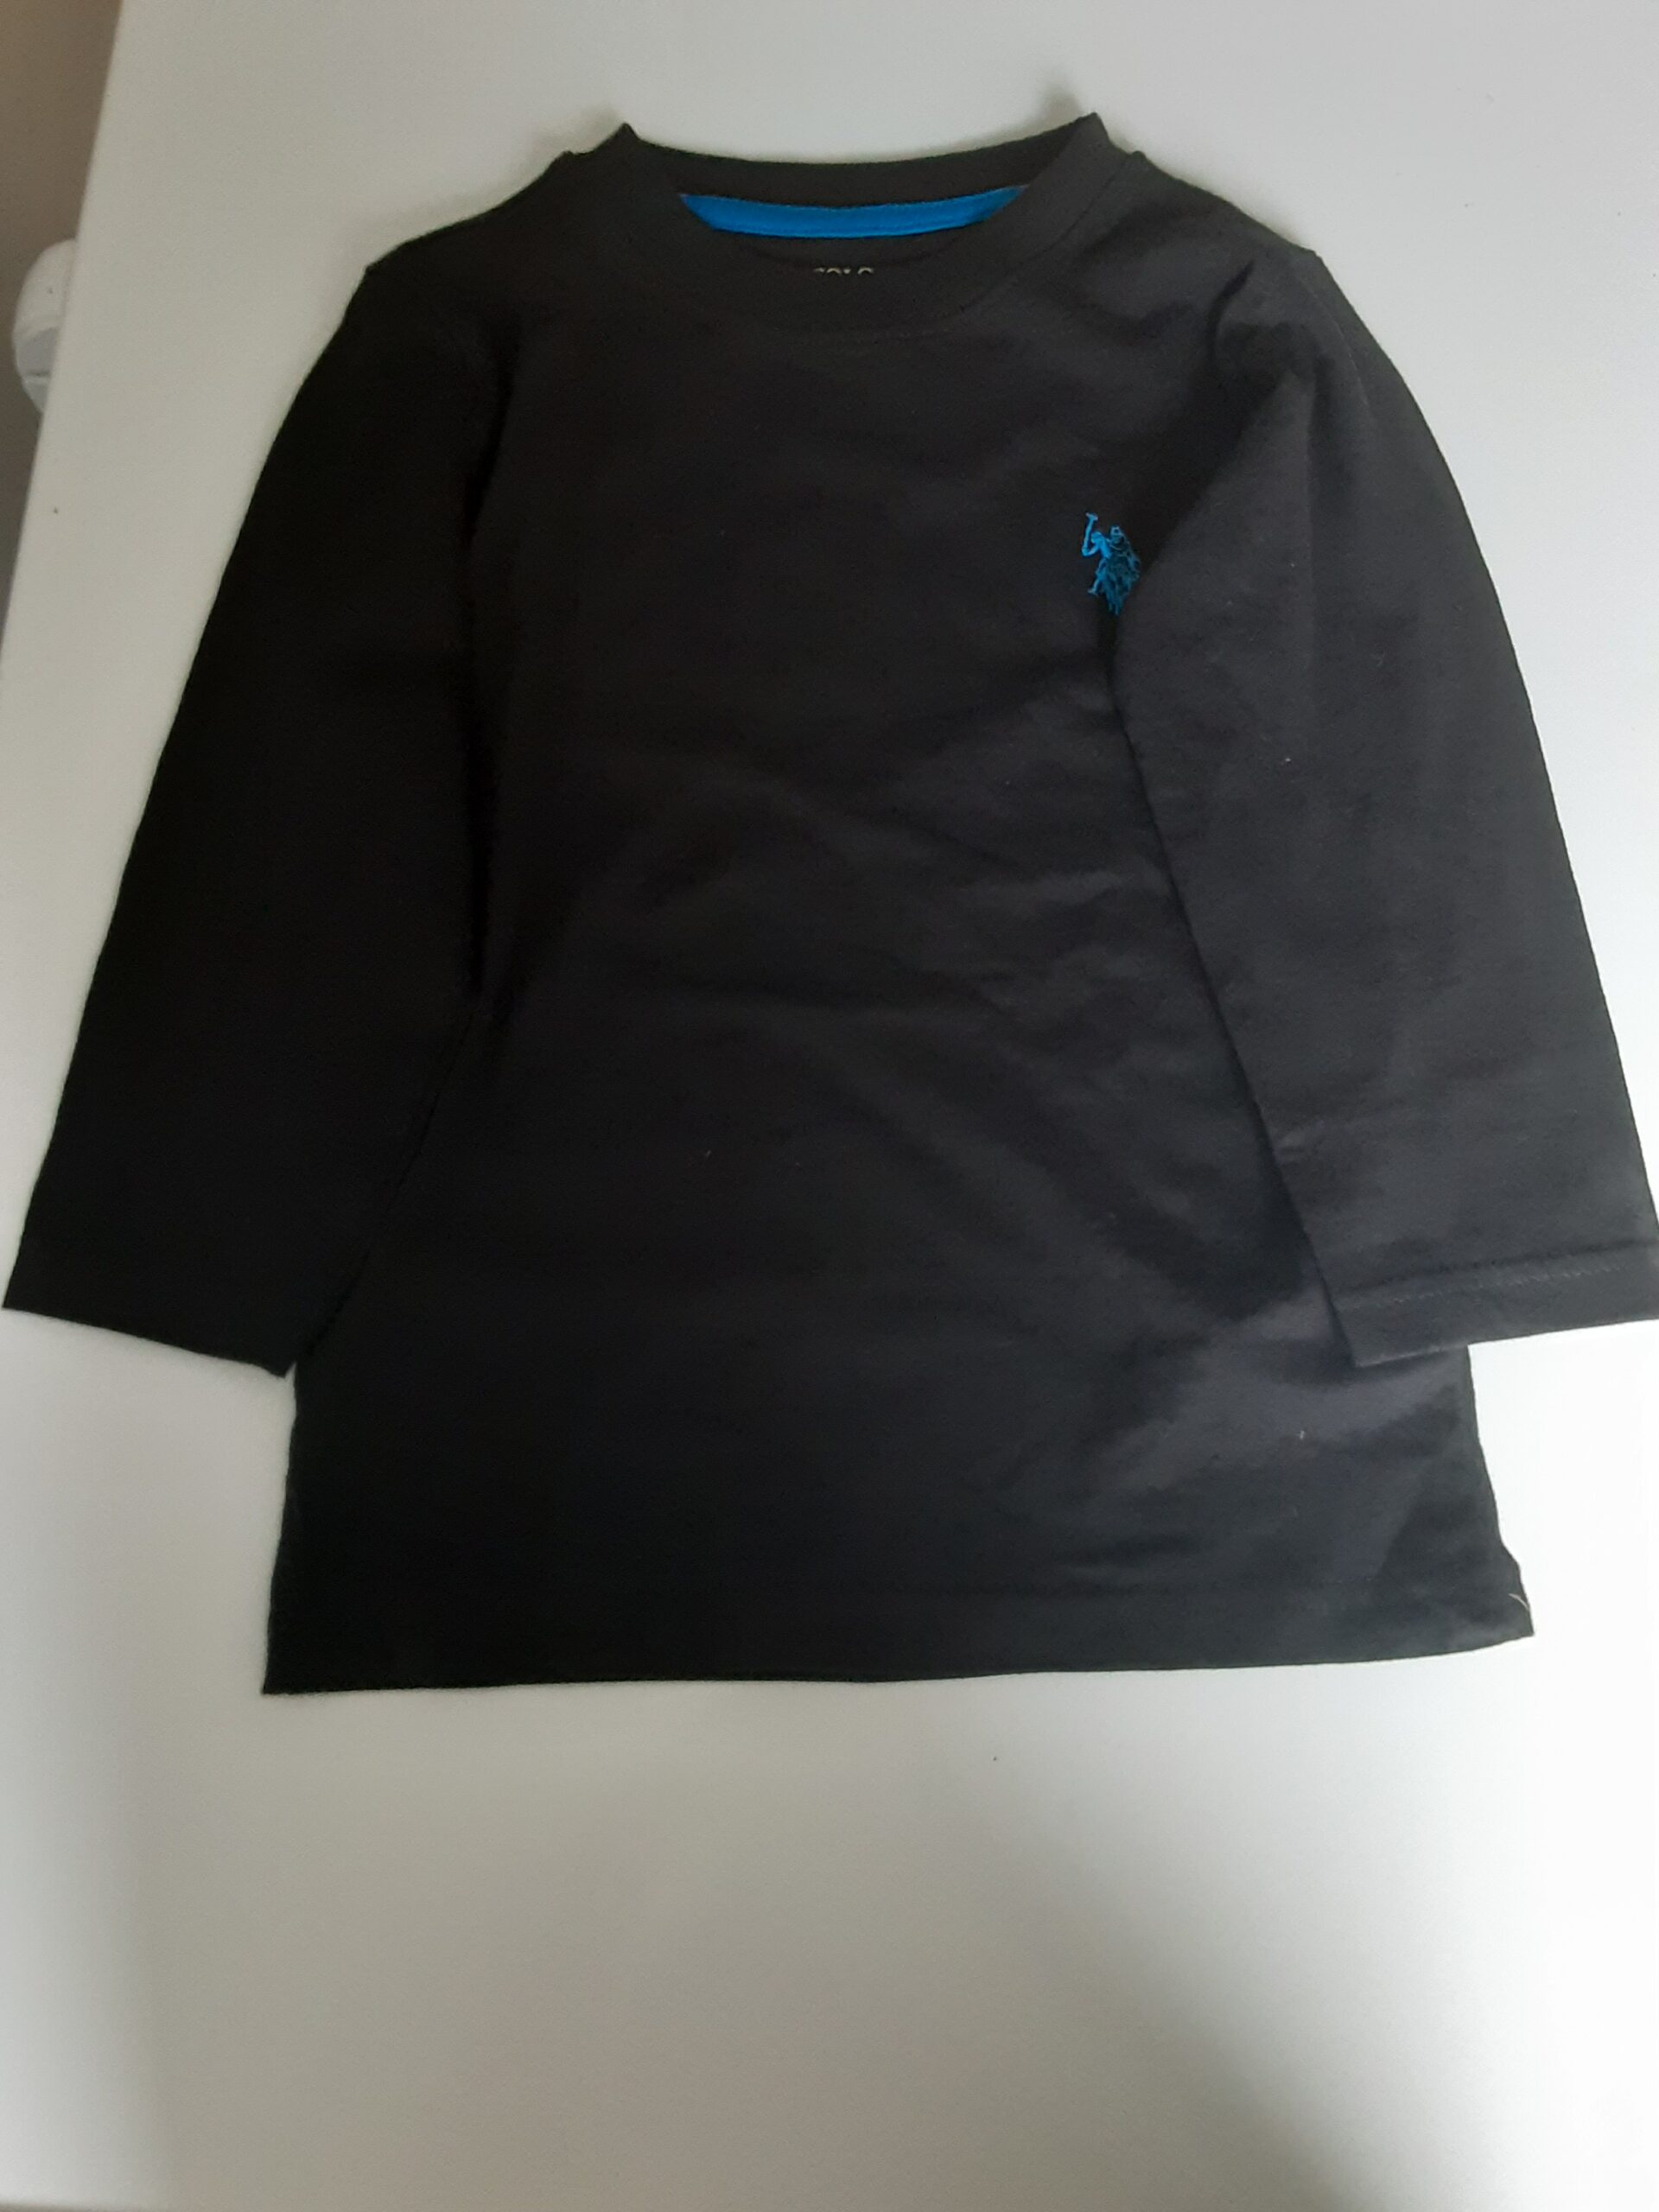 Polo long sleeved shirt black/blue